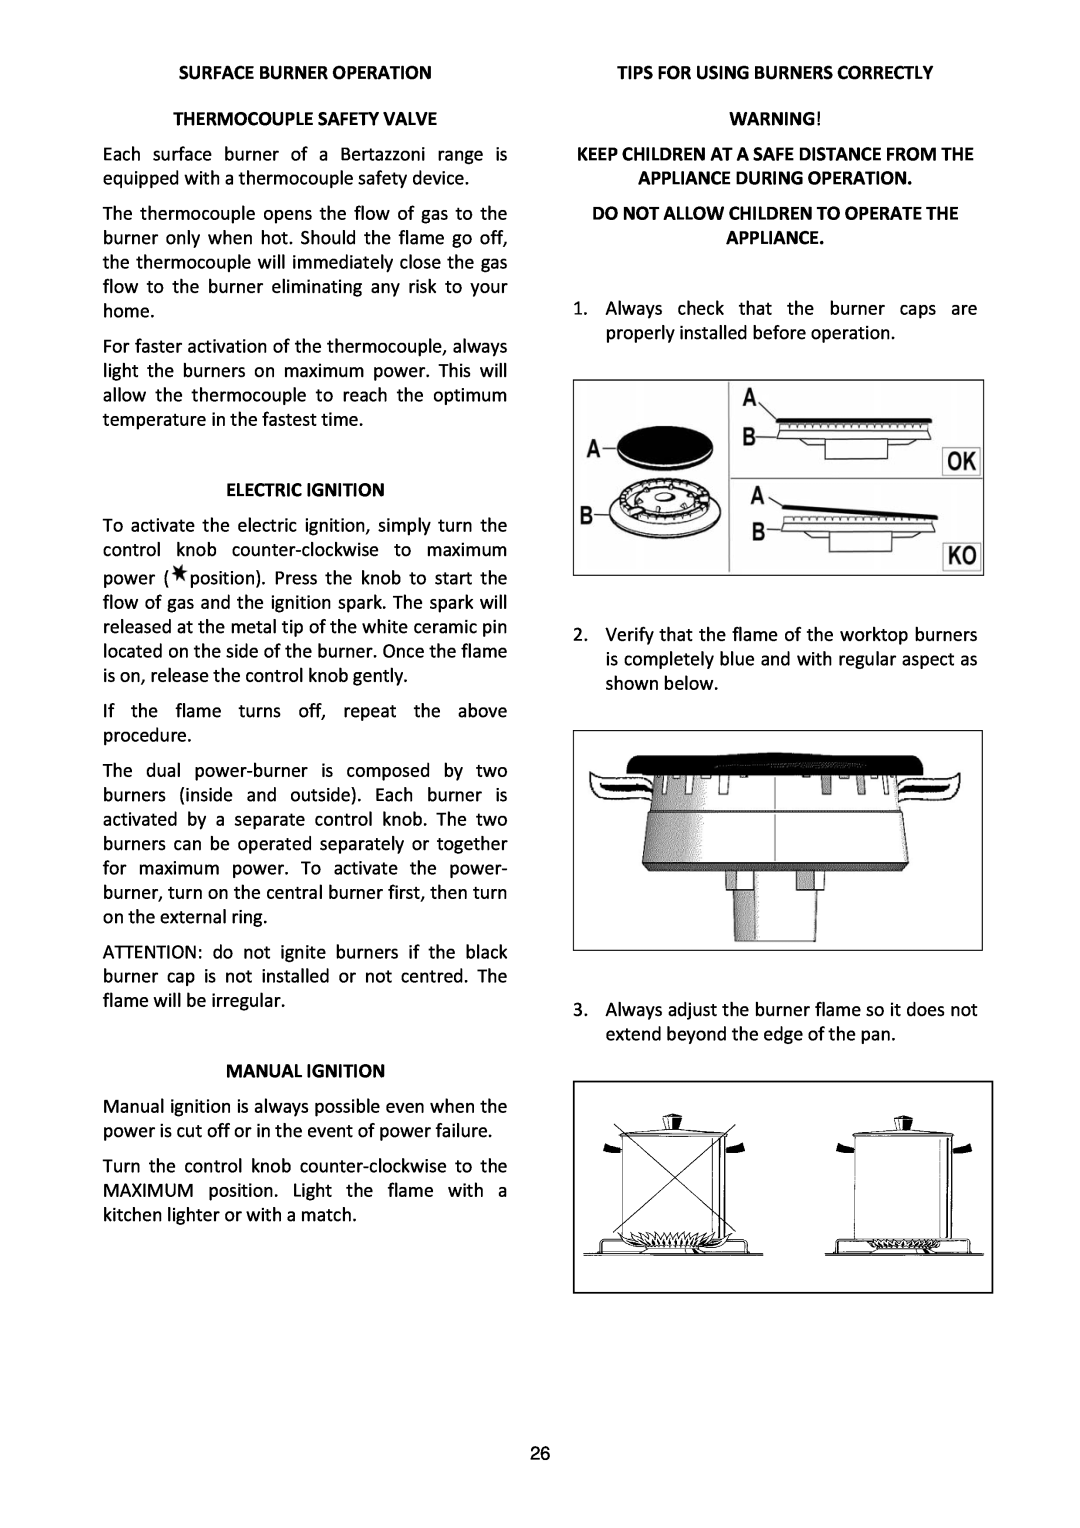 Bertazzoni MAS304DFMXE manual Surface Burner Operation Thermocouple Safety Valve, Electric Ignition, Manual Ignition 